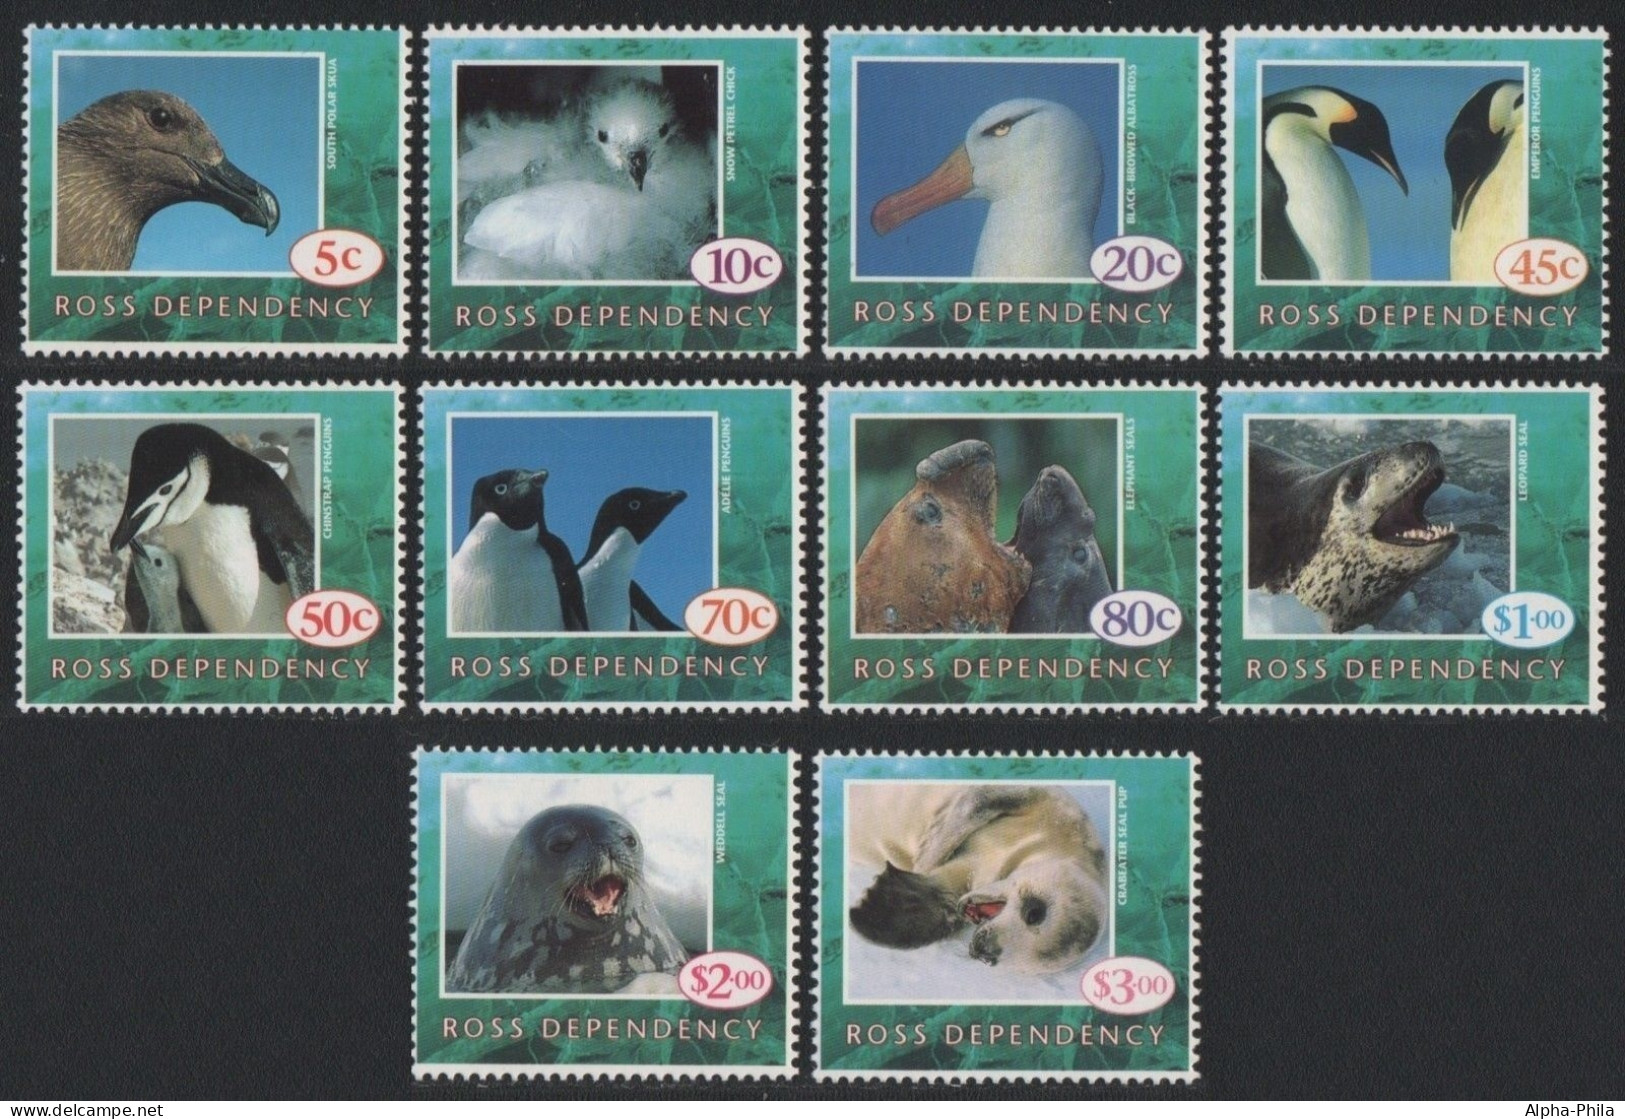 Ross-Gebiet 1994 - Mi-Nr. 21-30 ** - MNH - Vögel, Robben / Birds, Seals - Ungebraucht